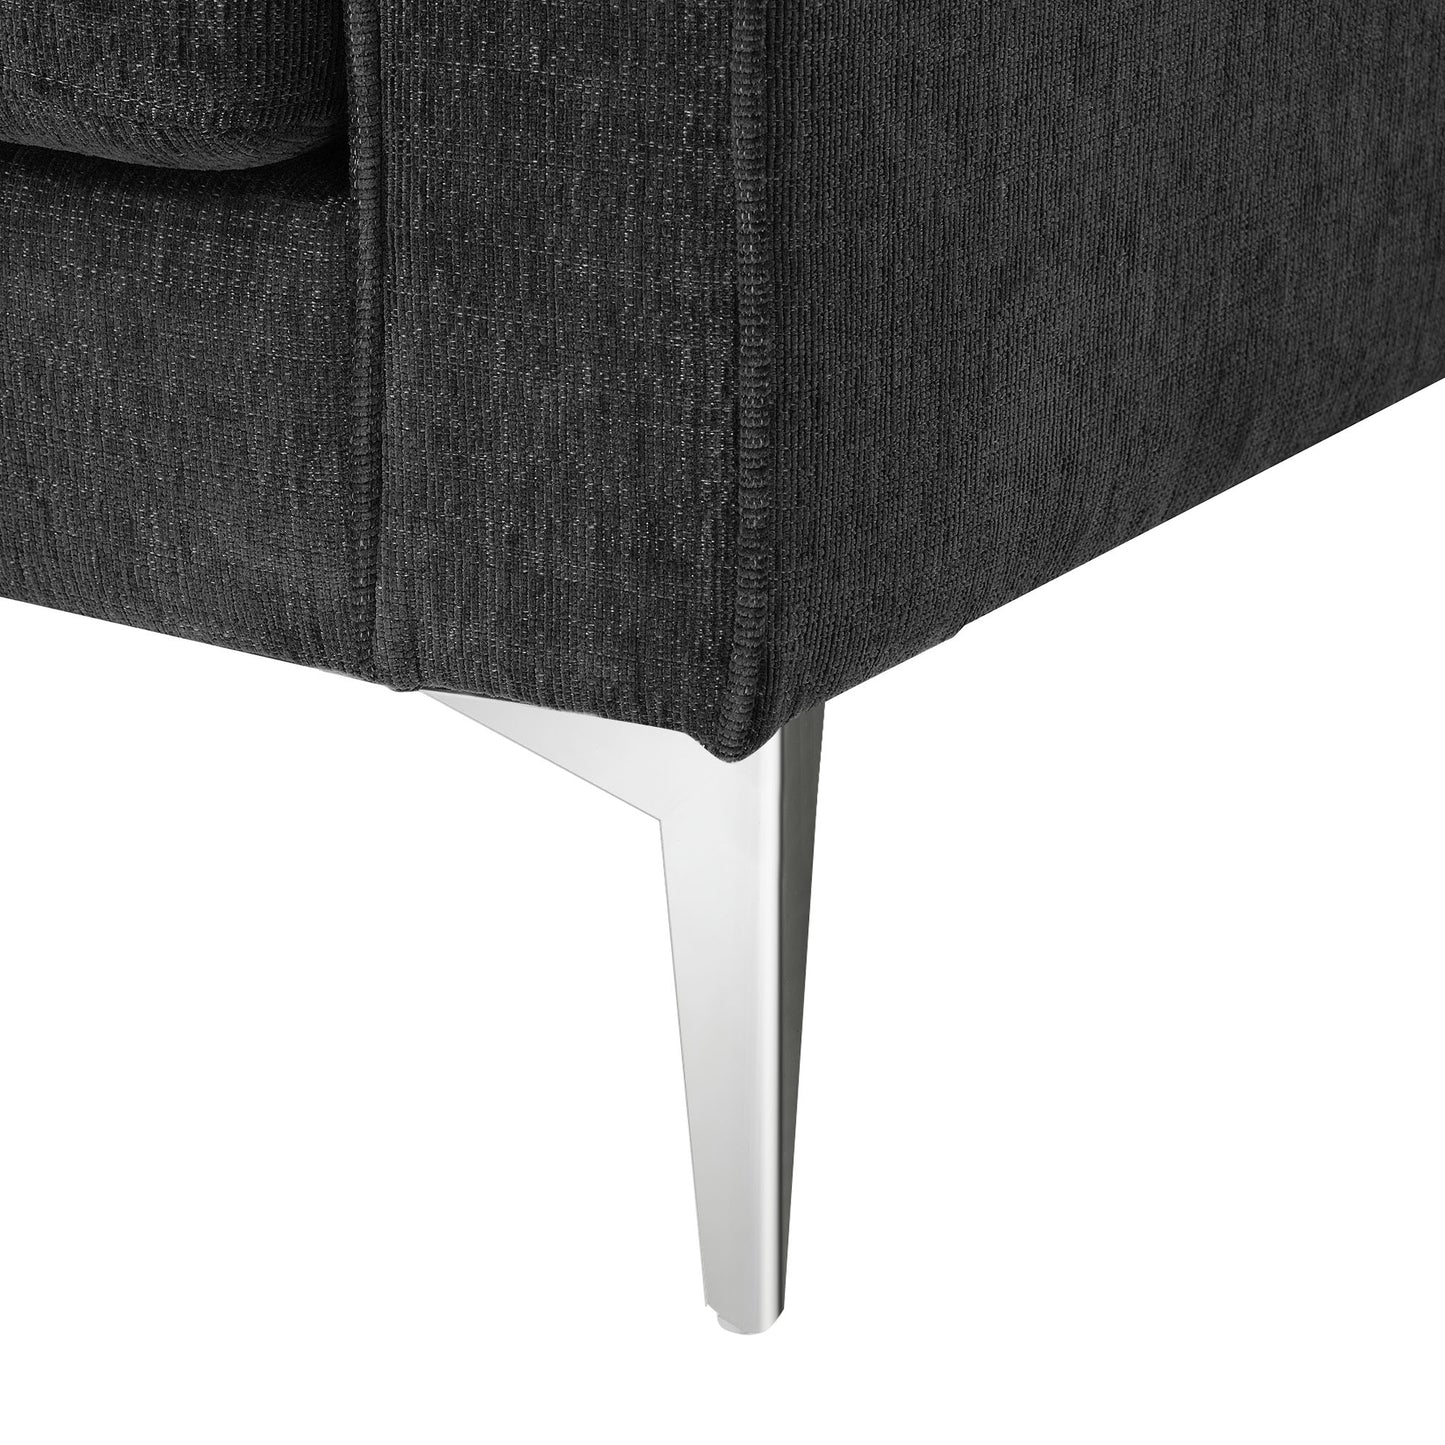 Burley 3PC Sofa Set w/Metal Legs